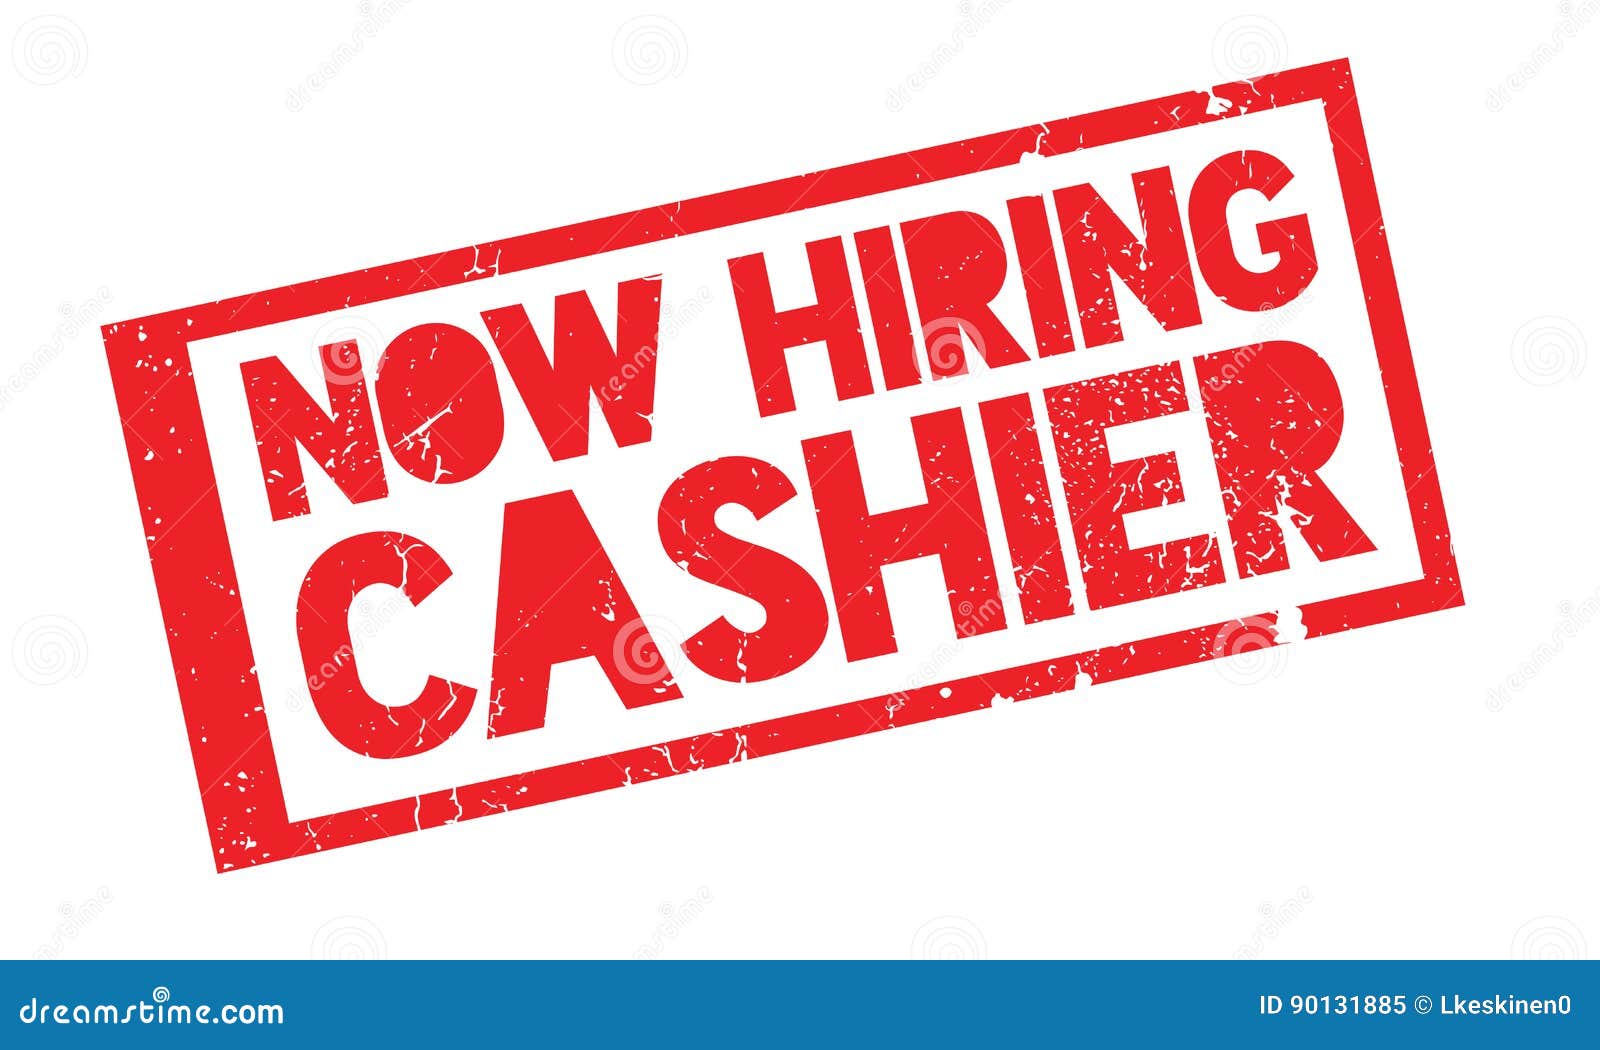 cashier jobs hiring now